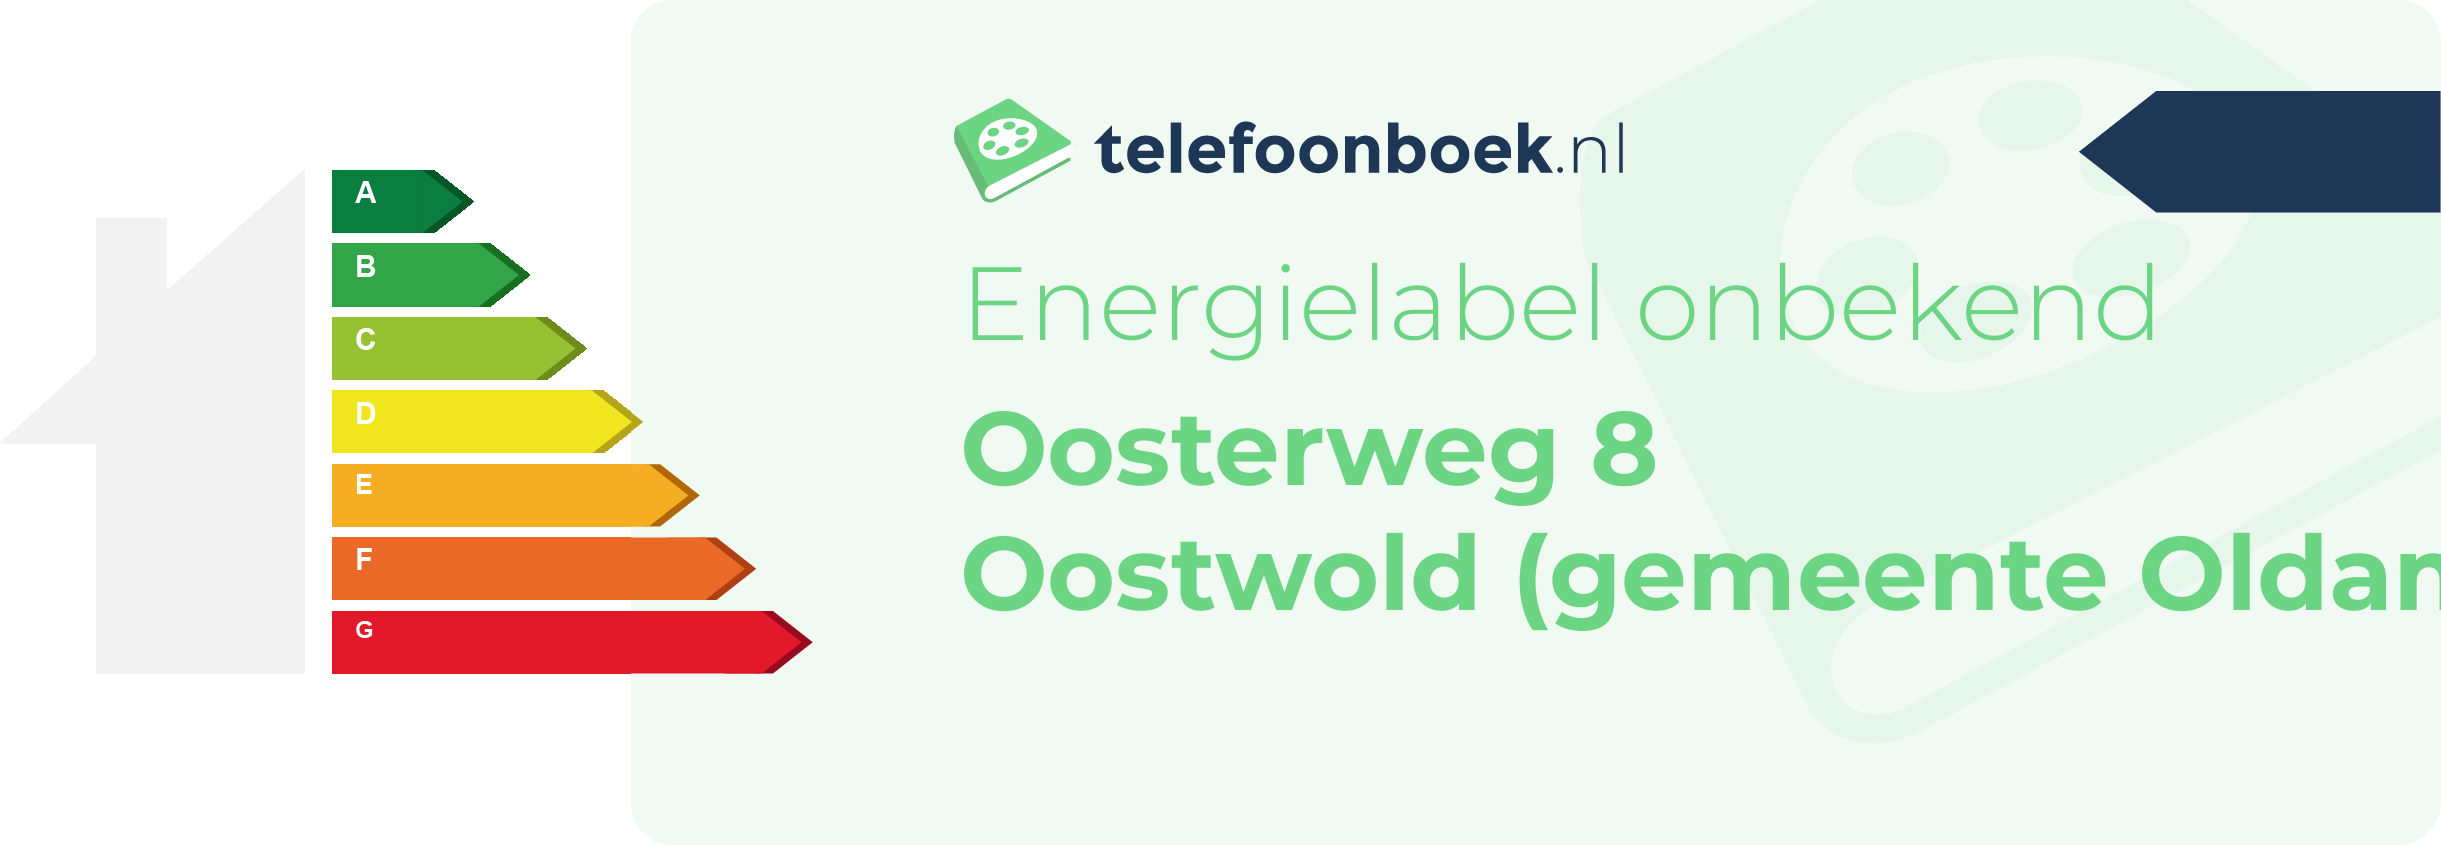 Energielabel Oosterweg 8 Oostwold (gemeente Oldambt Groningen)